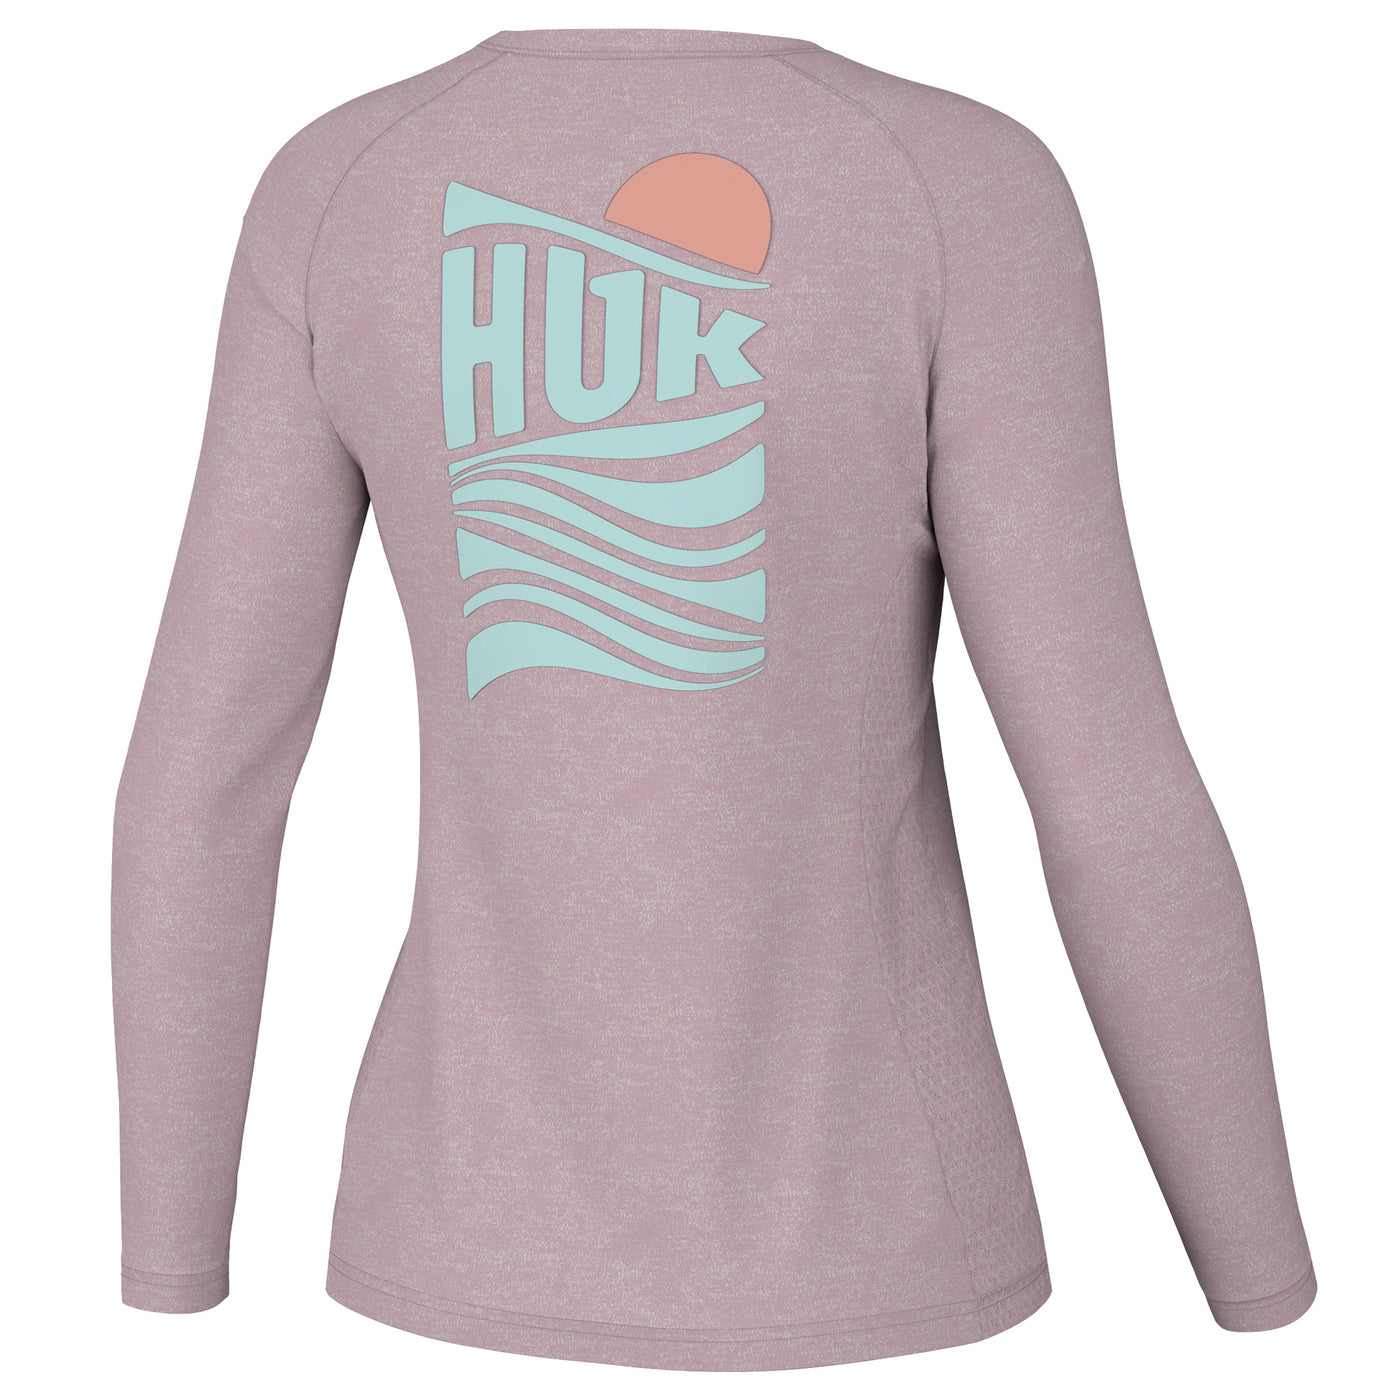 Huk Womens Wave Stripe Pursuit